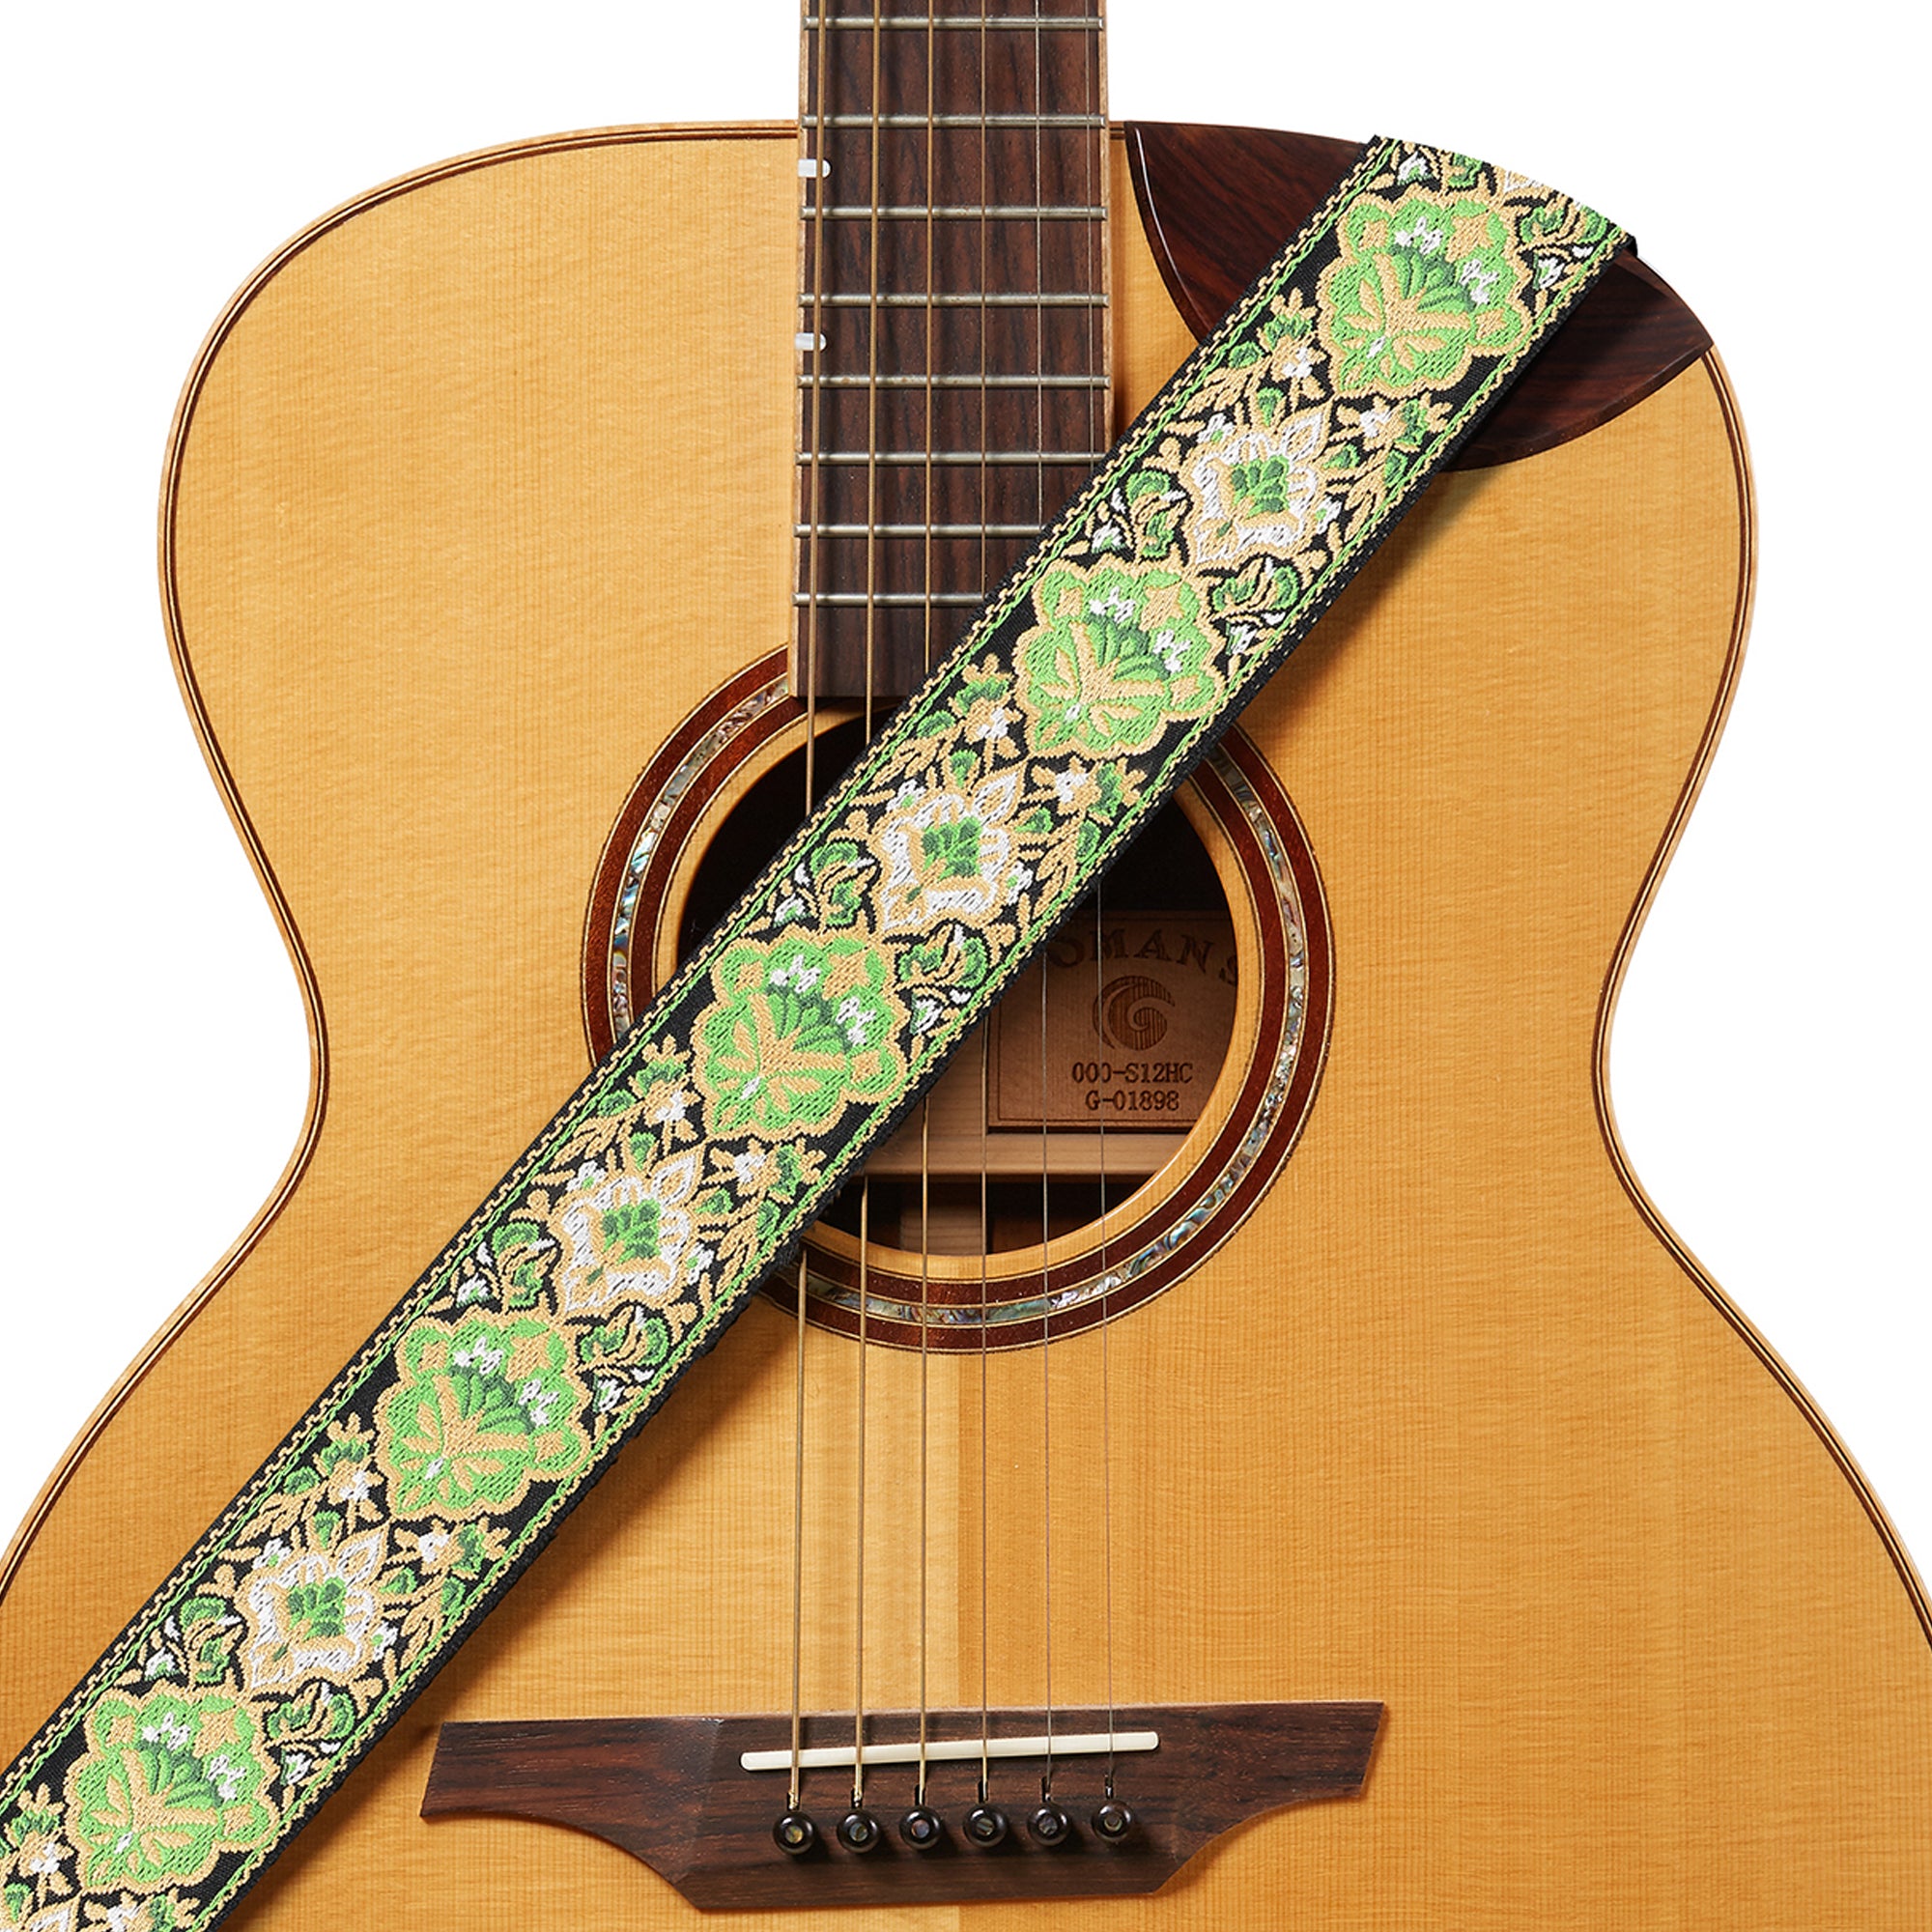 Amumu Suede Leather Flower Embroidered Guitar Strap -LE07-BK – AMUMU